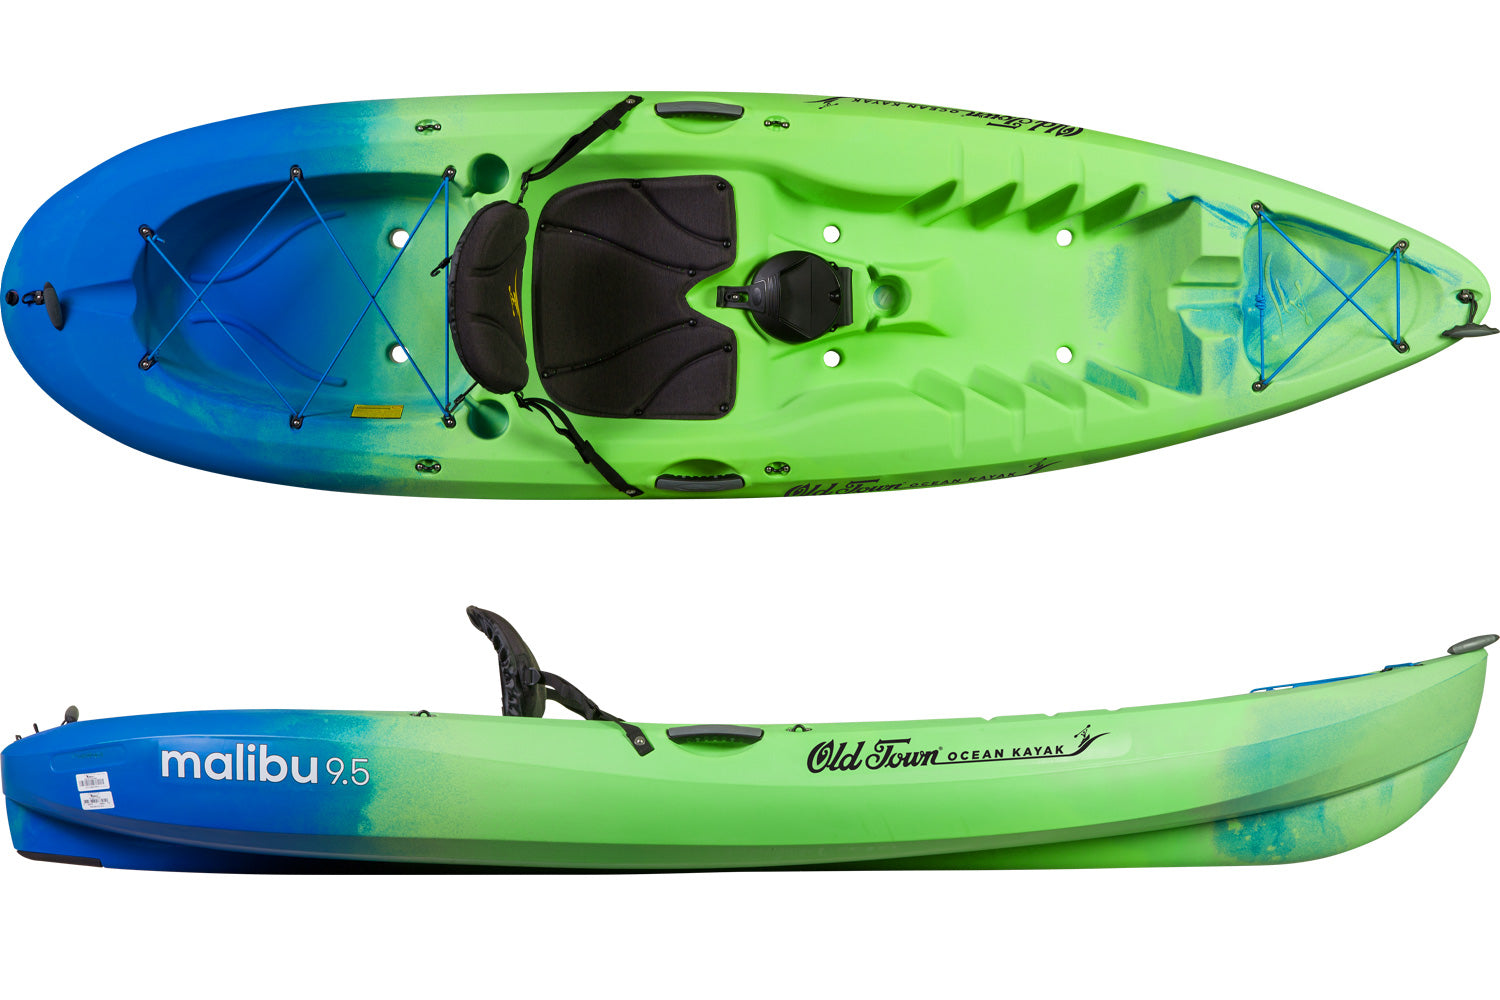 Two angles of the Ahi Colourcheme Ocean Kayak malibu 9.5 (Blue to green fade)